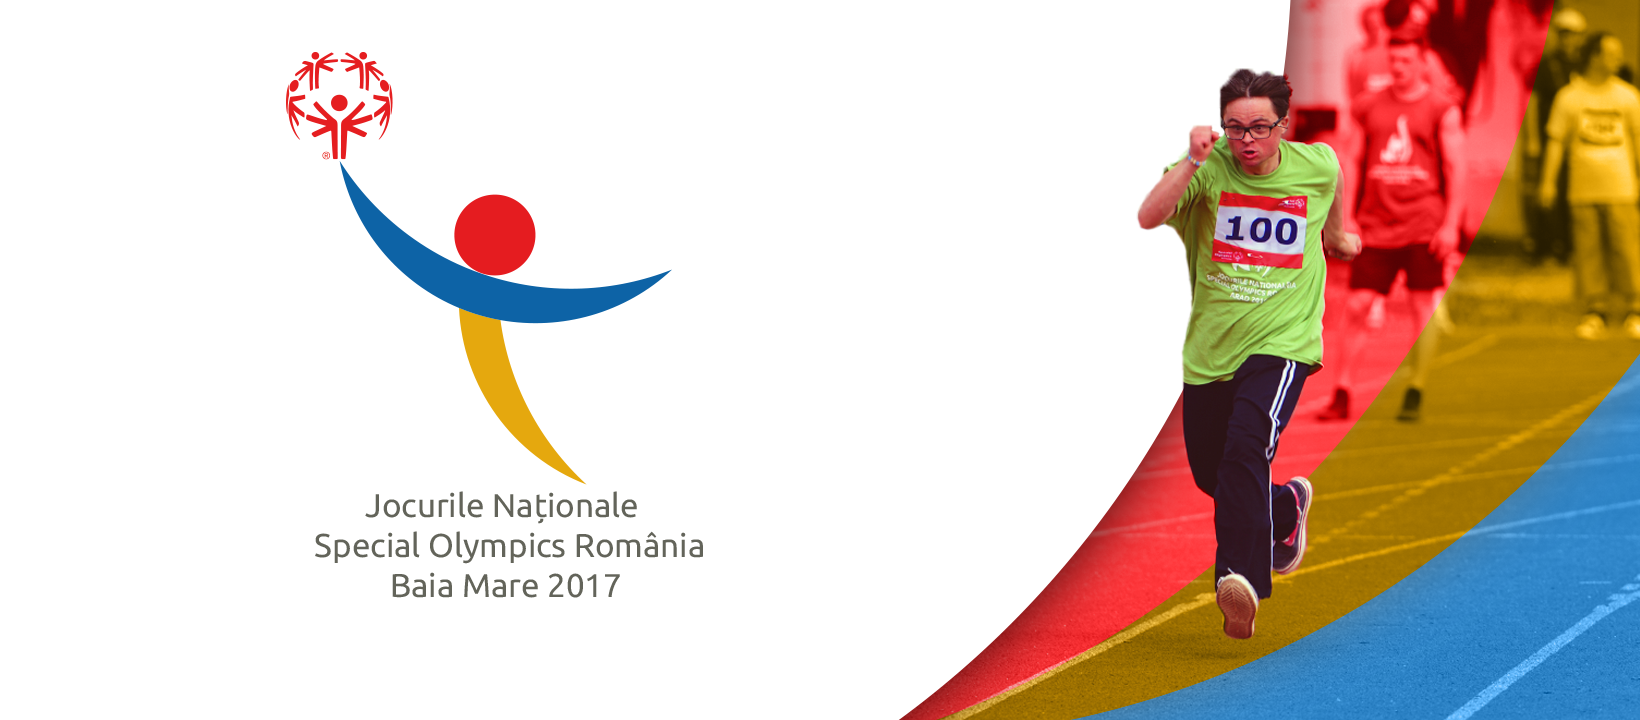 Special Olympics_Jocurile Nationale Baia Mare